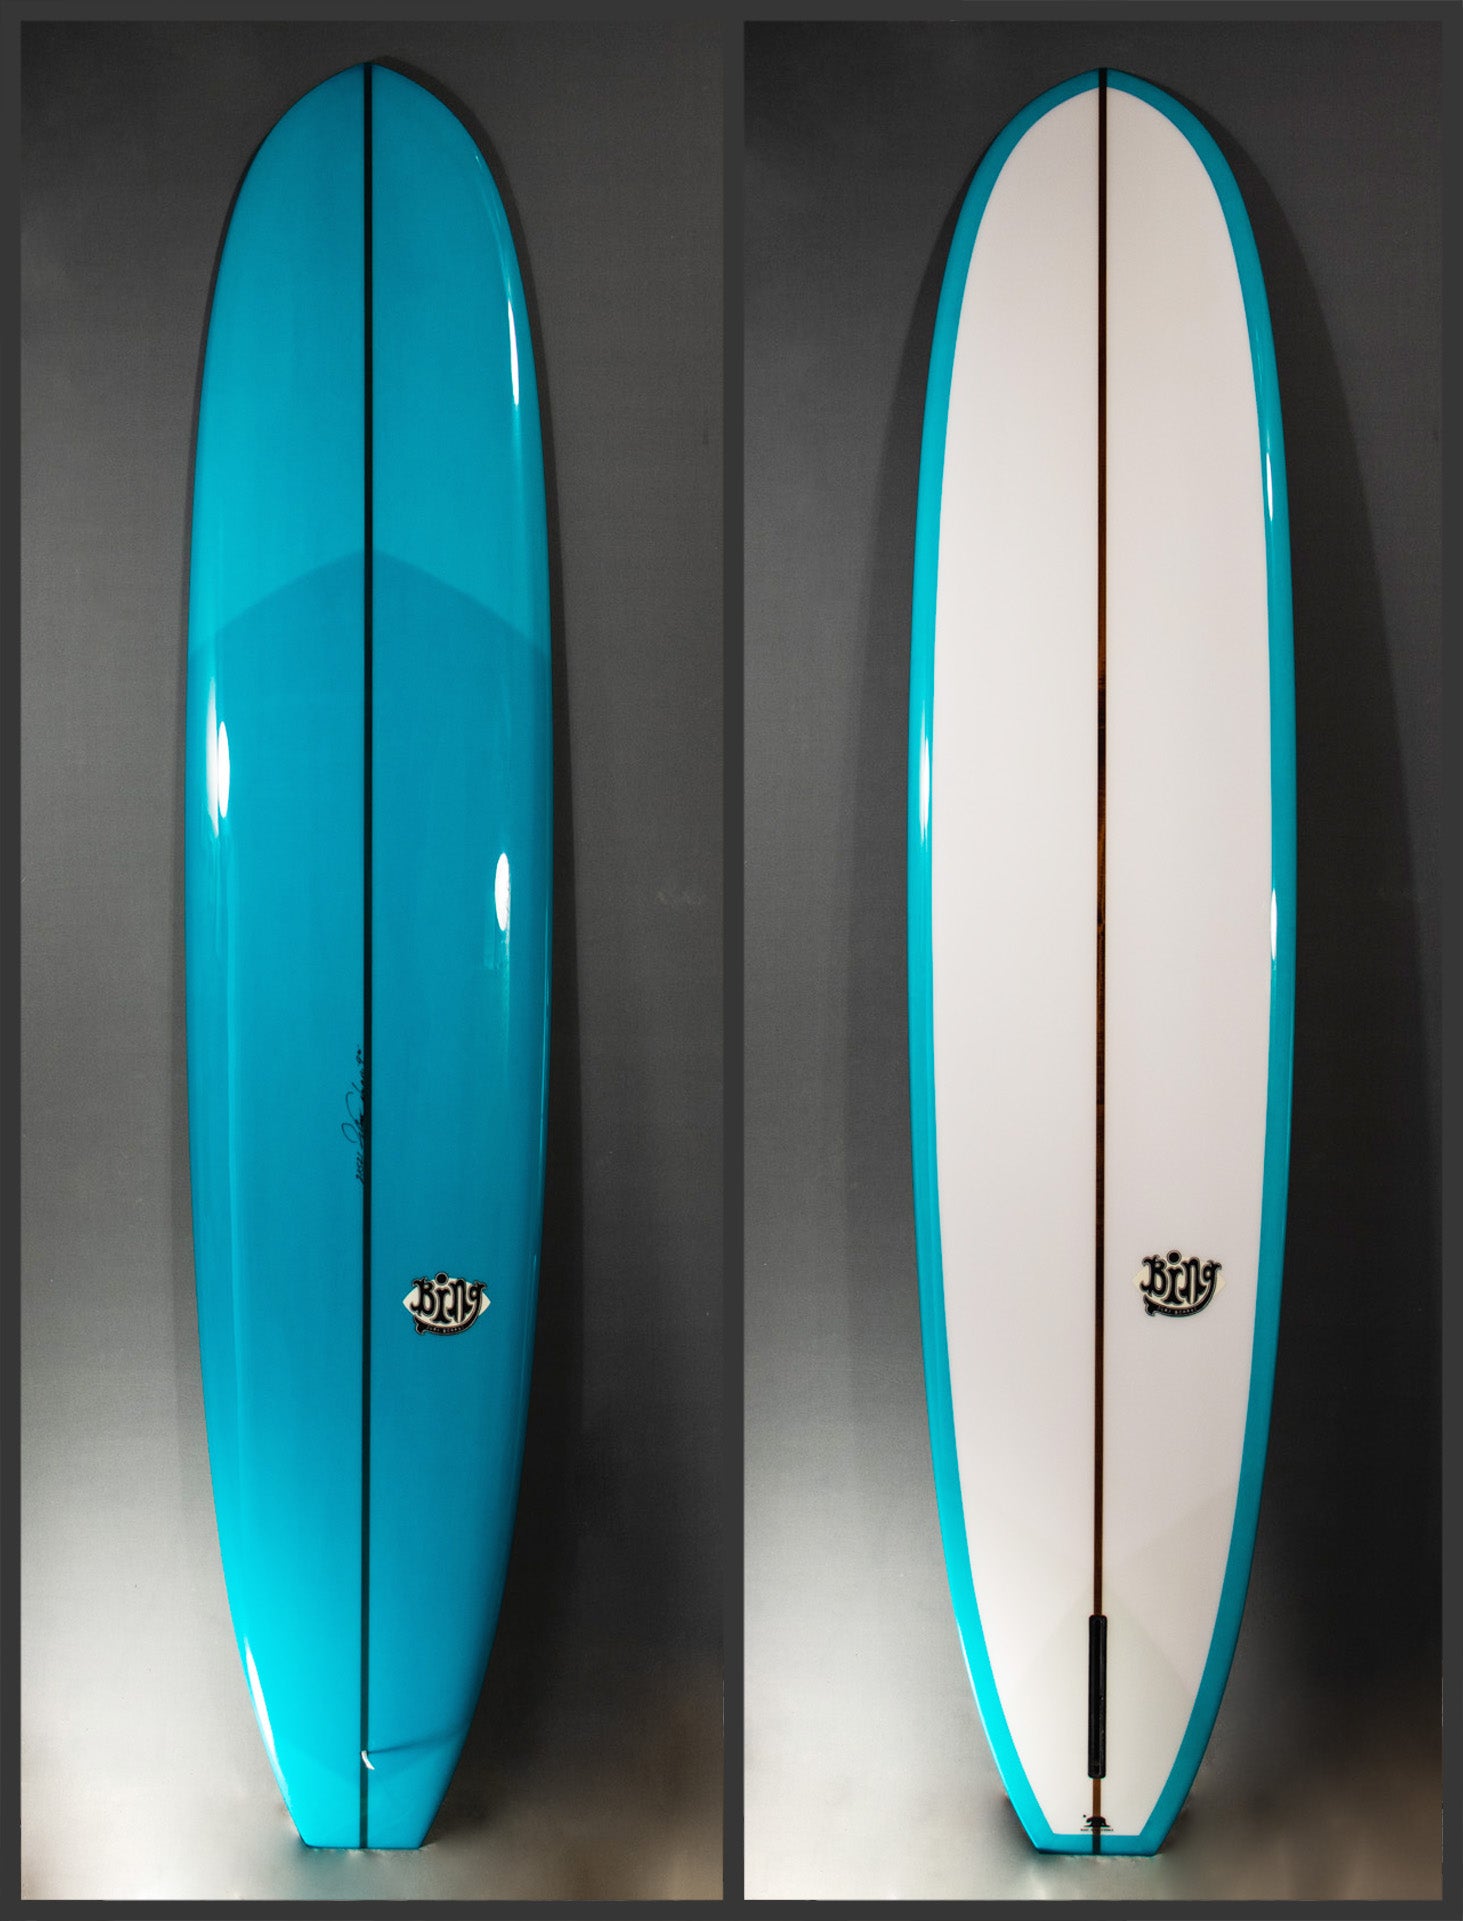 All Boards in Stock - Bing Surfboards